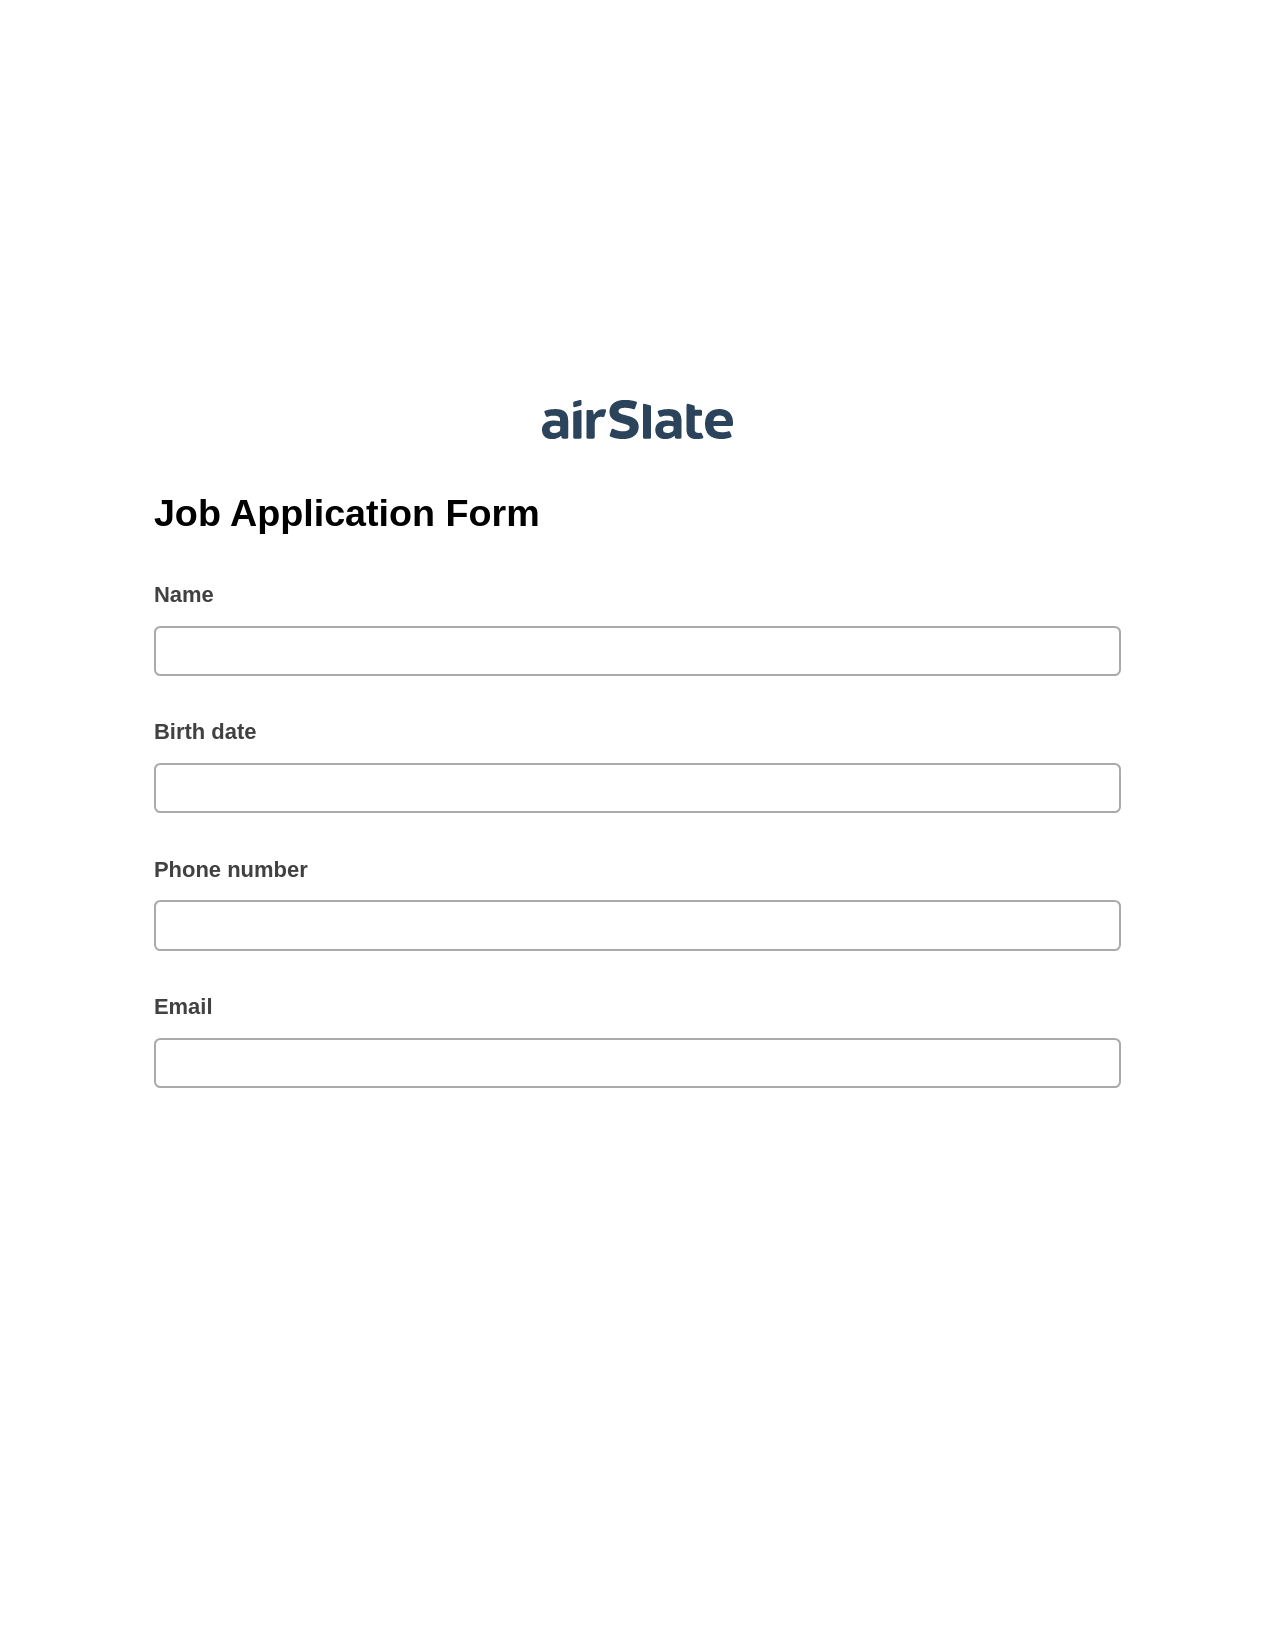 Multirole Job Application Form Pre-fill from Google Sheets Bot, Google Sheet Two-Way Binding Bot, Export to Smartsheet